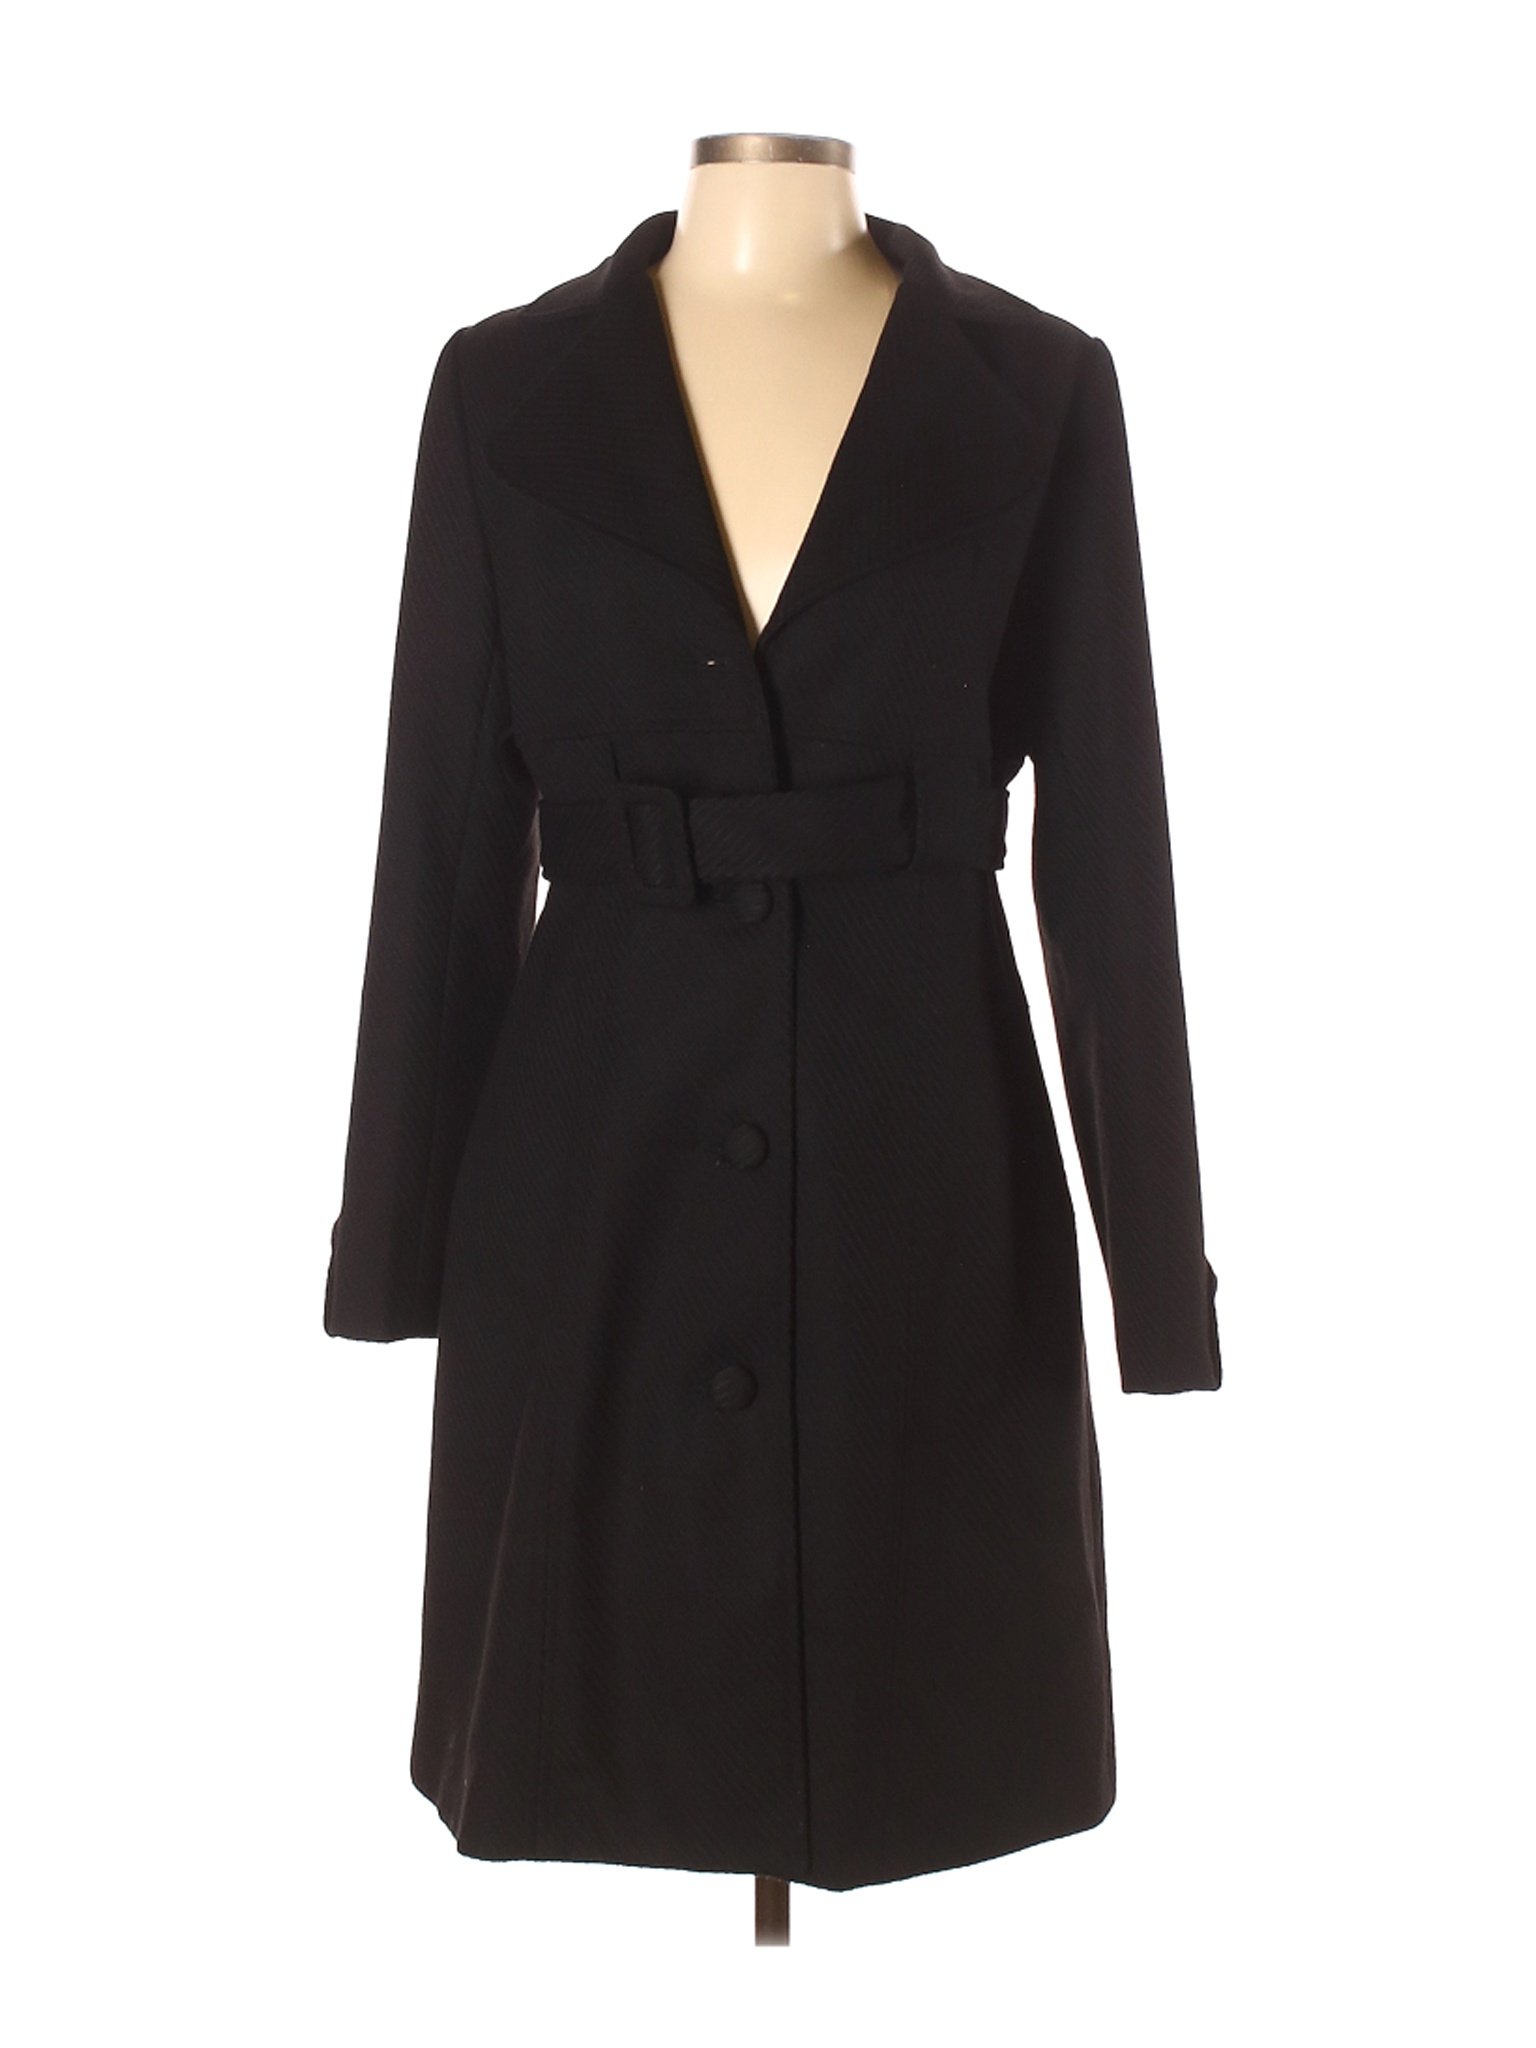 Unbranded Women Black Coat L | eBay